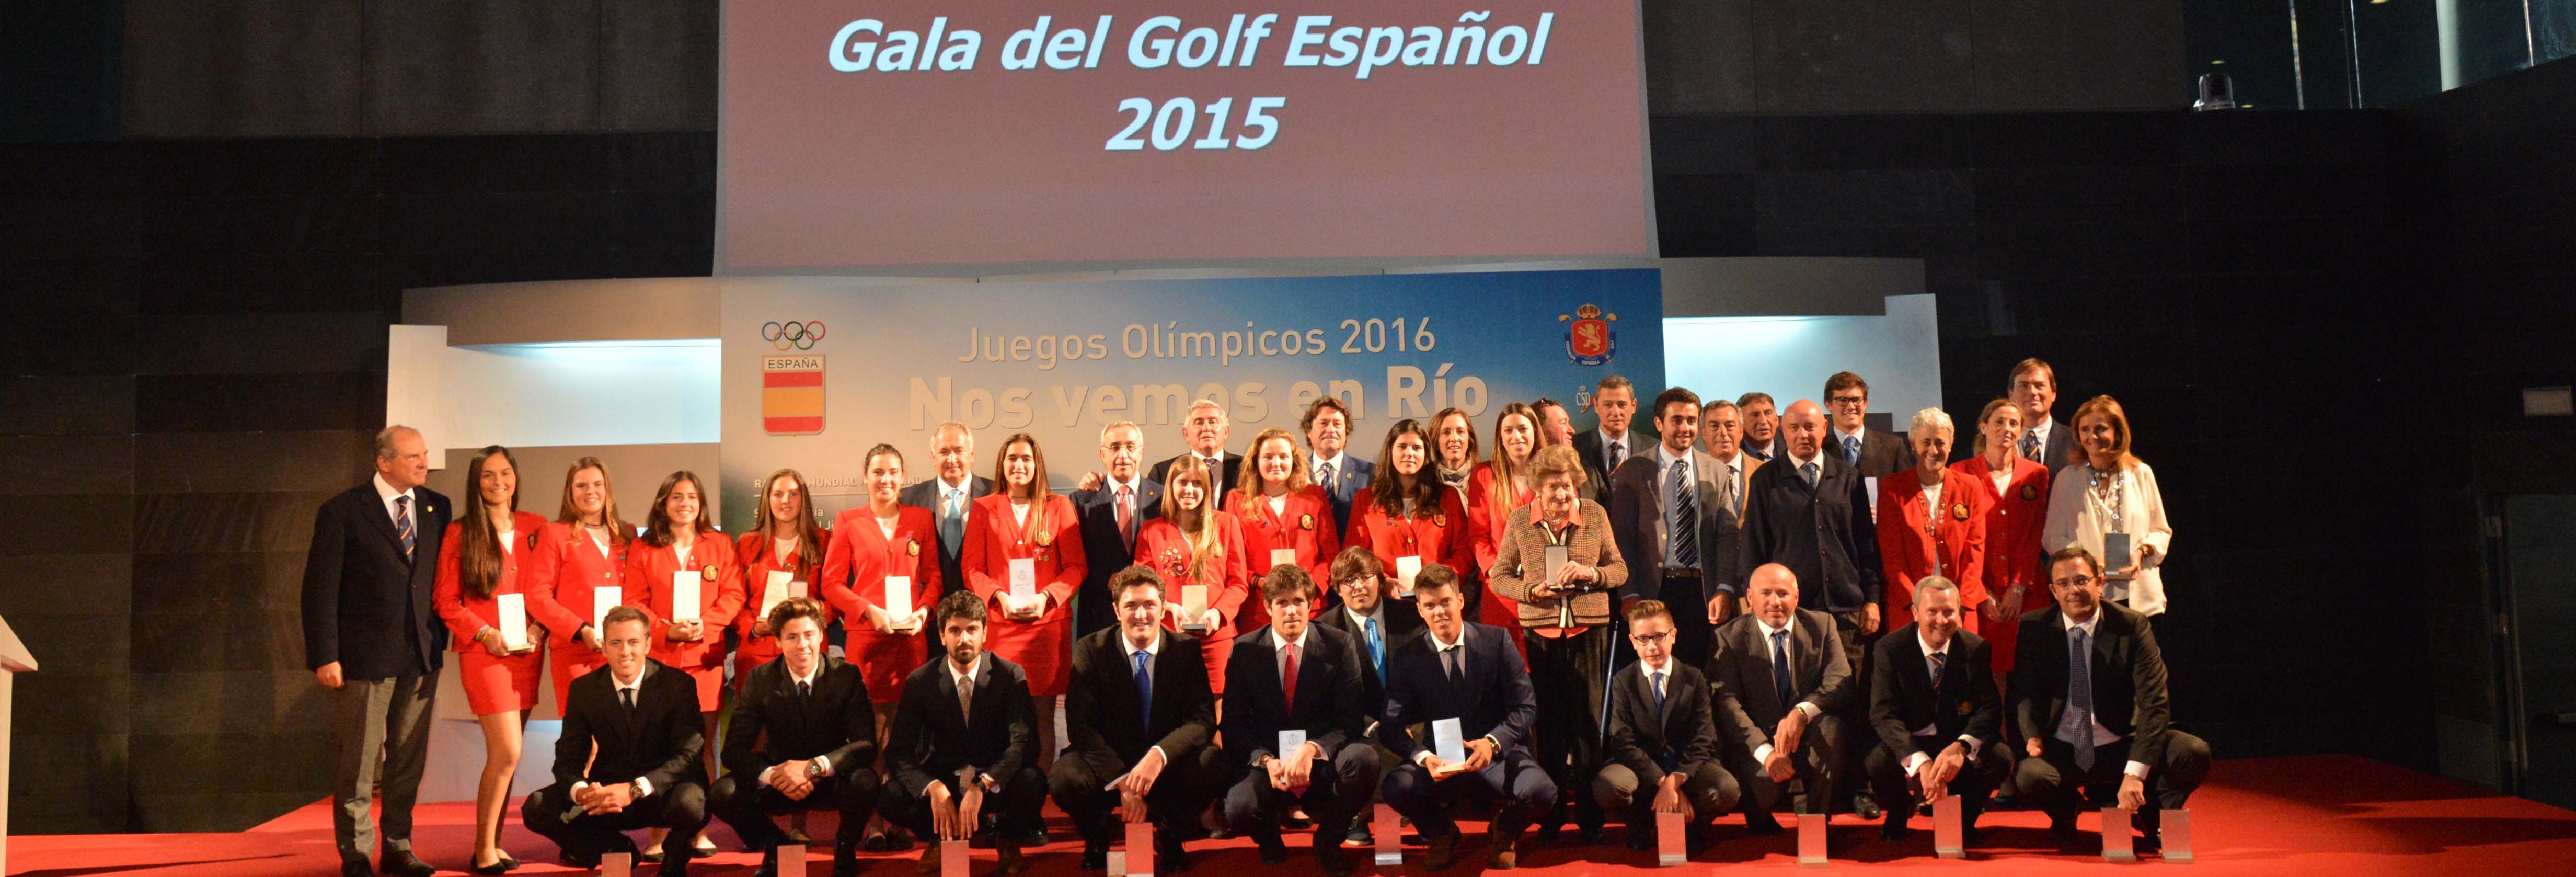 Gala Golf Español 2015